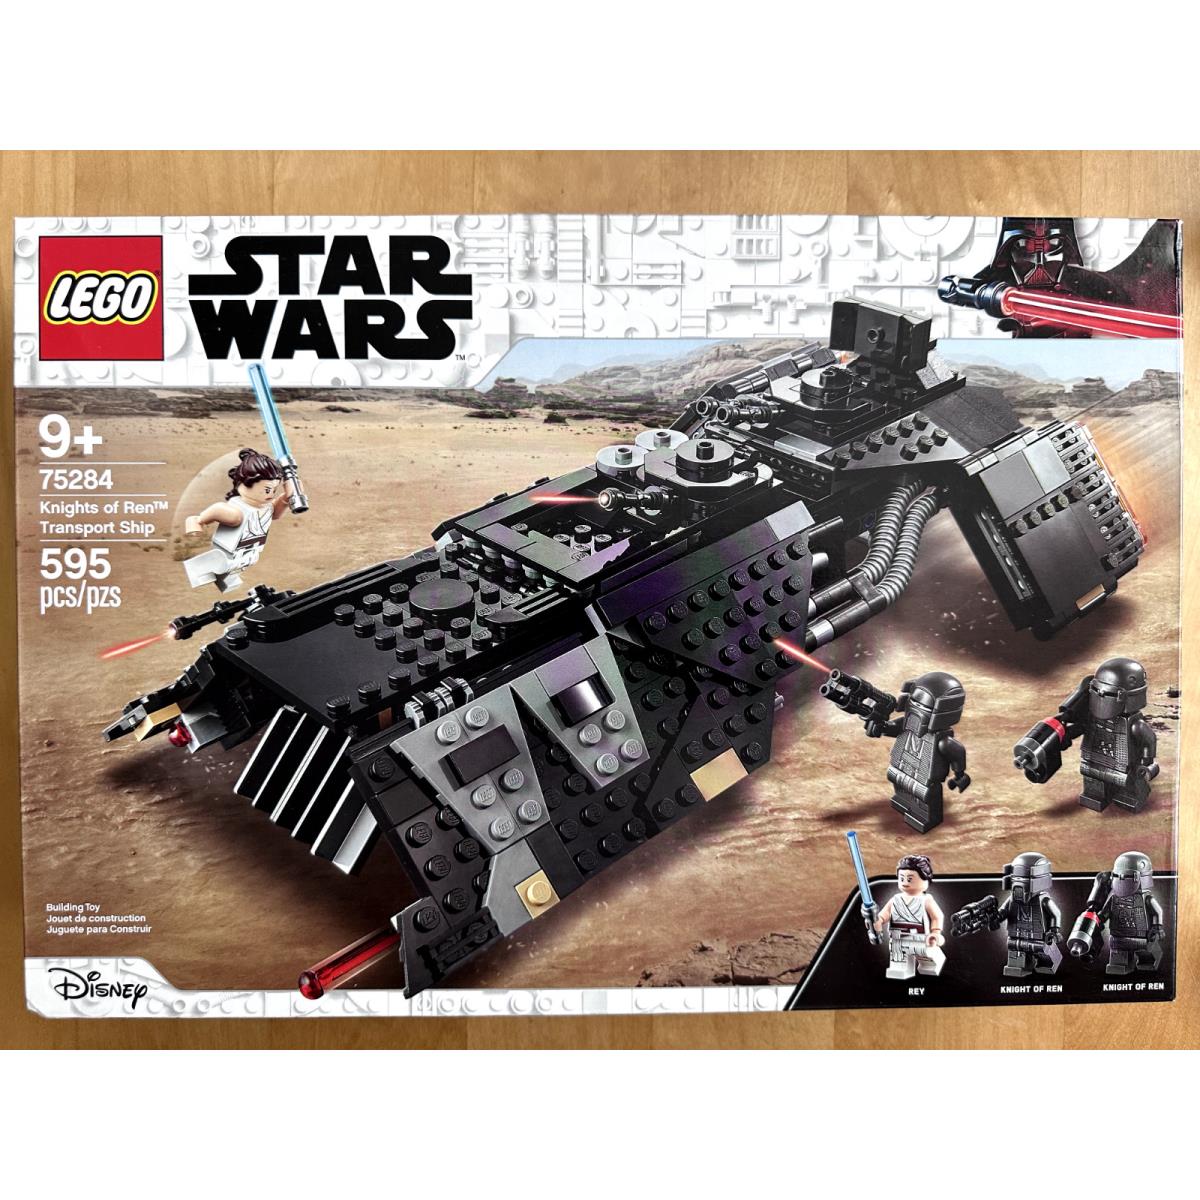 Lego Star Wars 75284 Knights of Ren Transport Ship Nisb